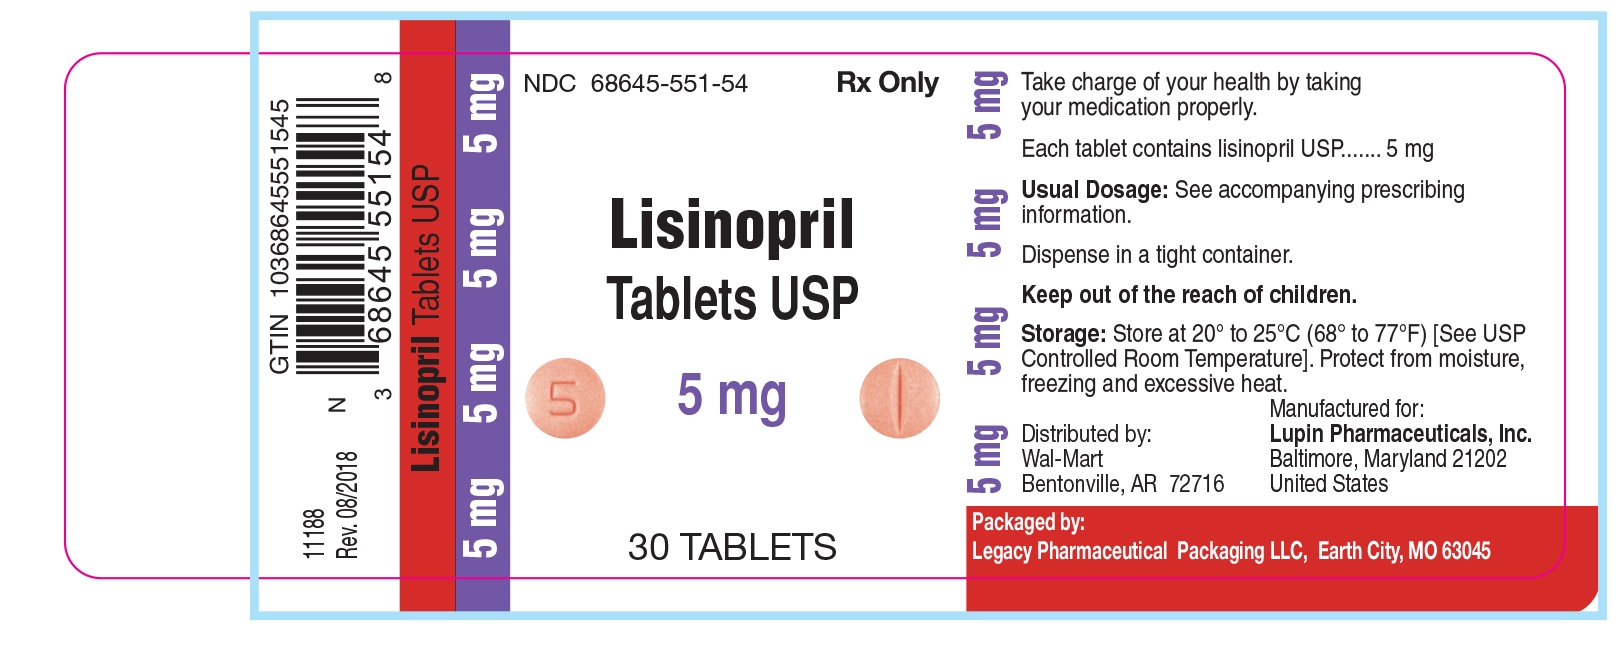 Lisinopril Tablets USP 5 mg